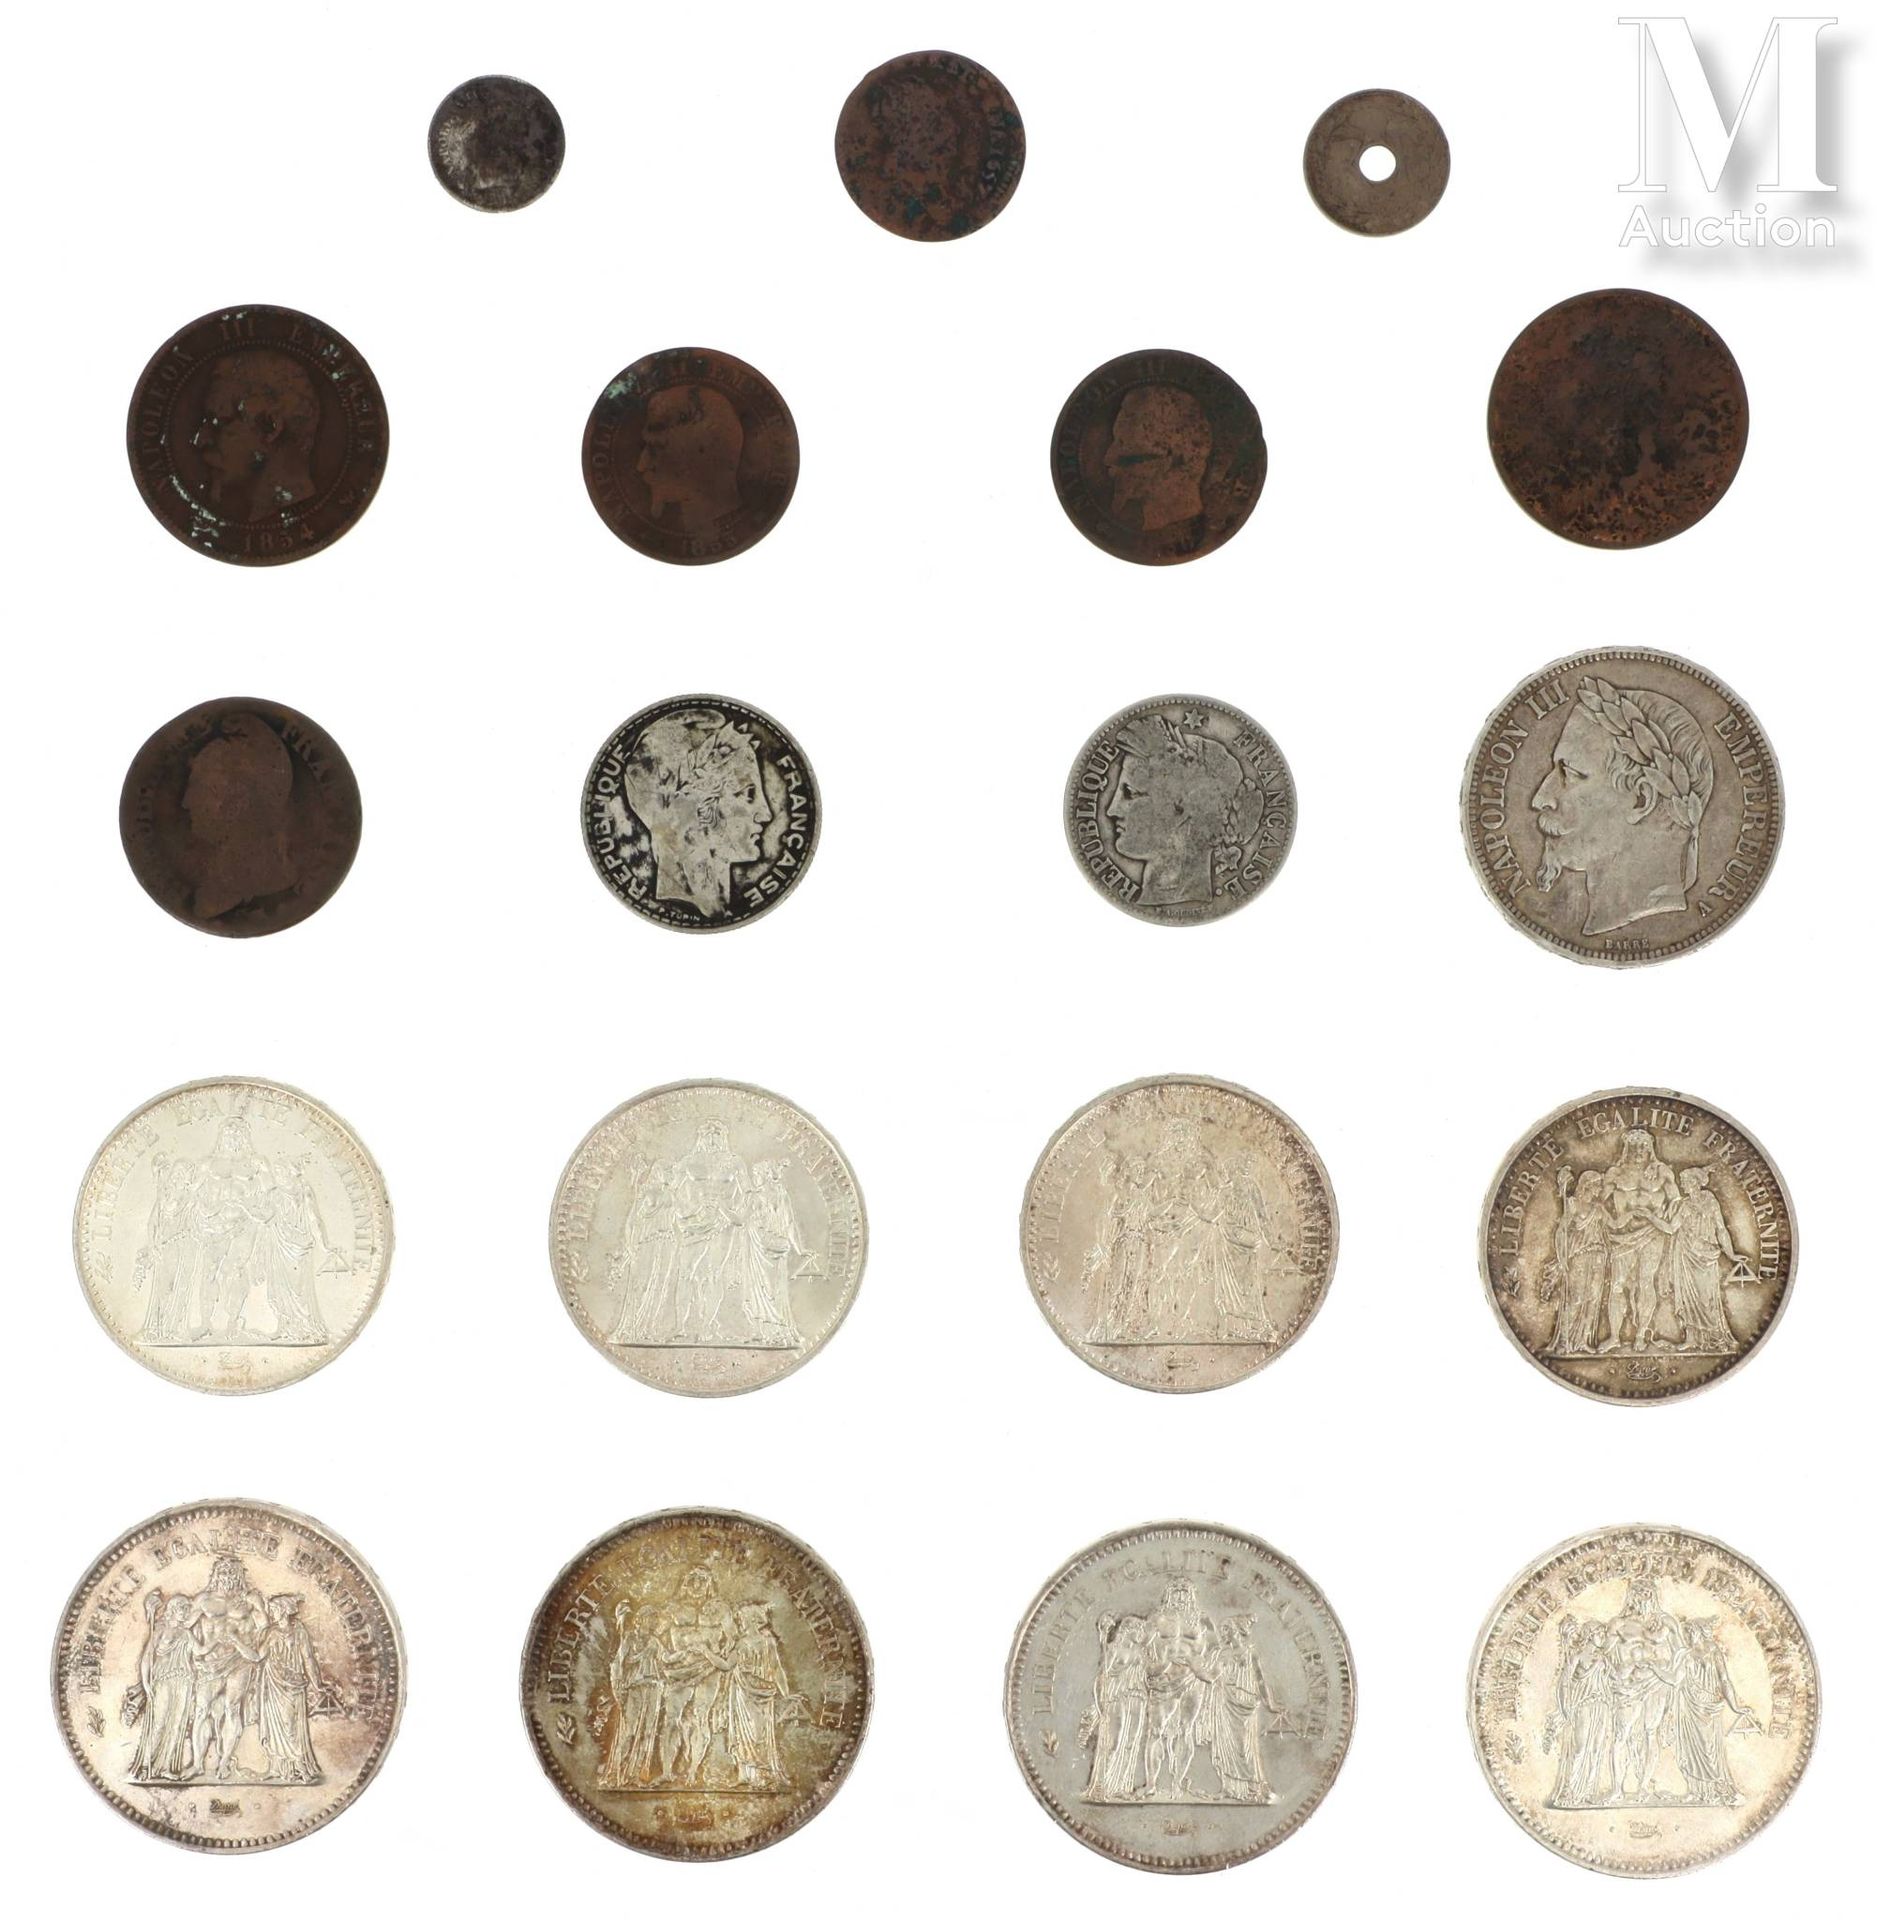 LOT DE PIECES DE MONNAIE EN ARGENT Lot von Silbermünzen bestehend aus : 

- 4 x &hellip;